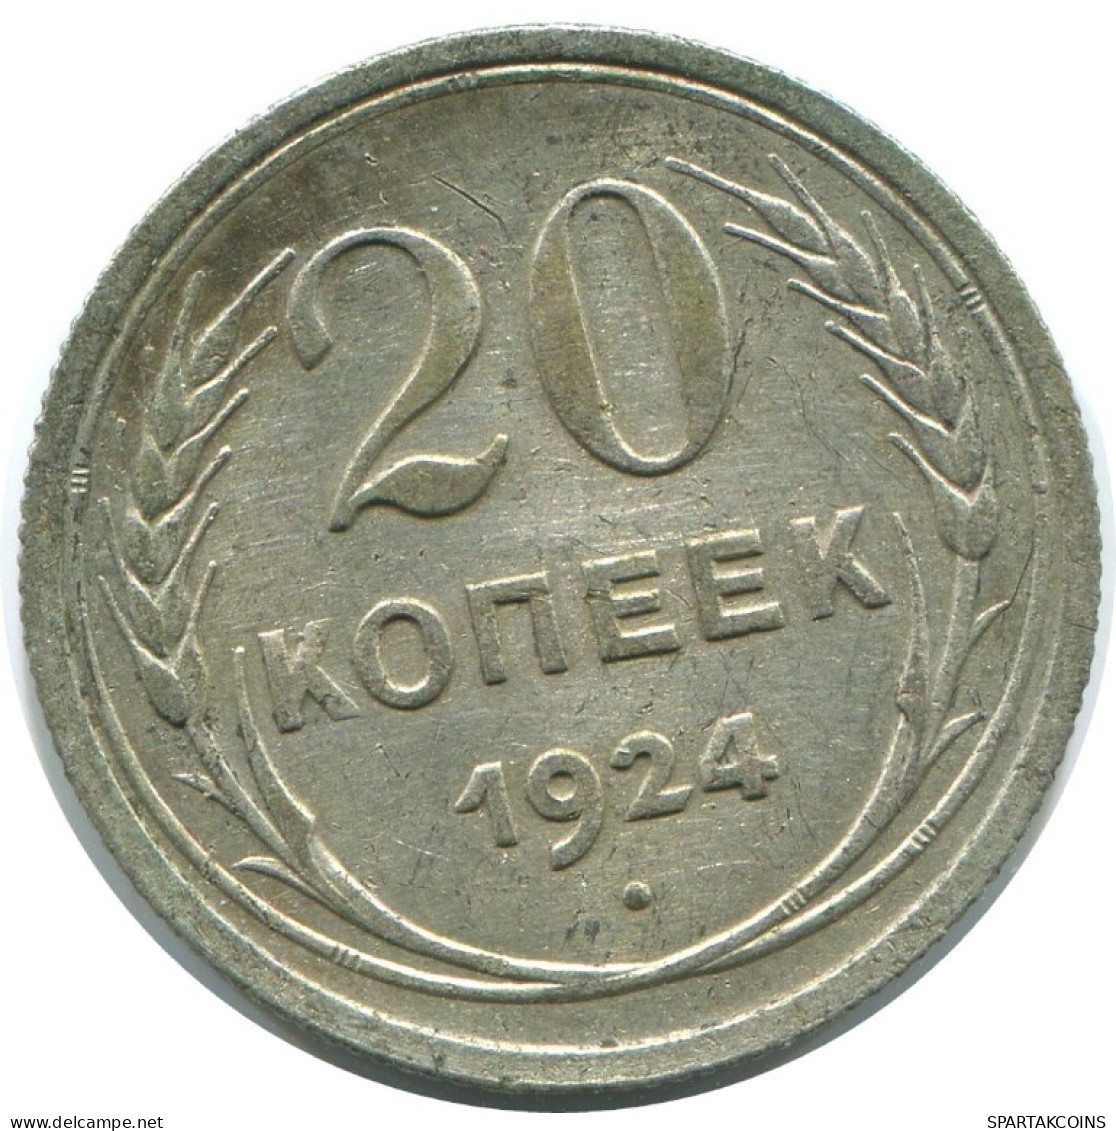 20 KOPEKS 1924 RUSSIA USSR SILVER Coin HIGH GRADE #AF307.4.U.A - Rusia